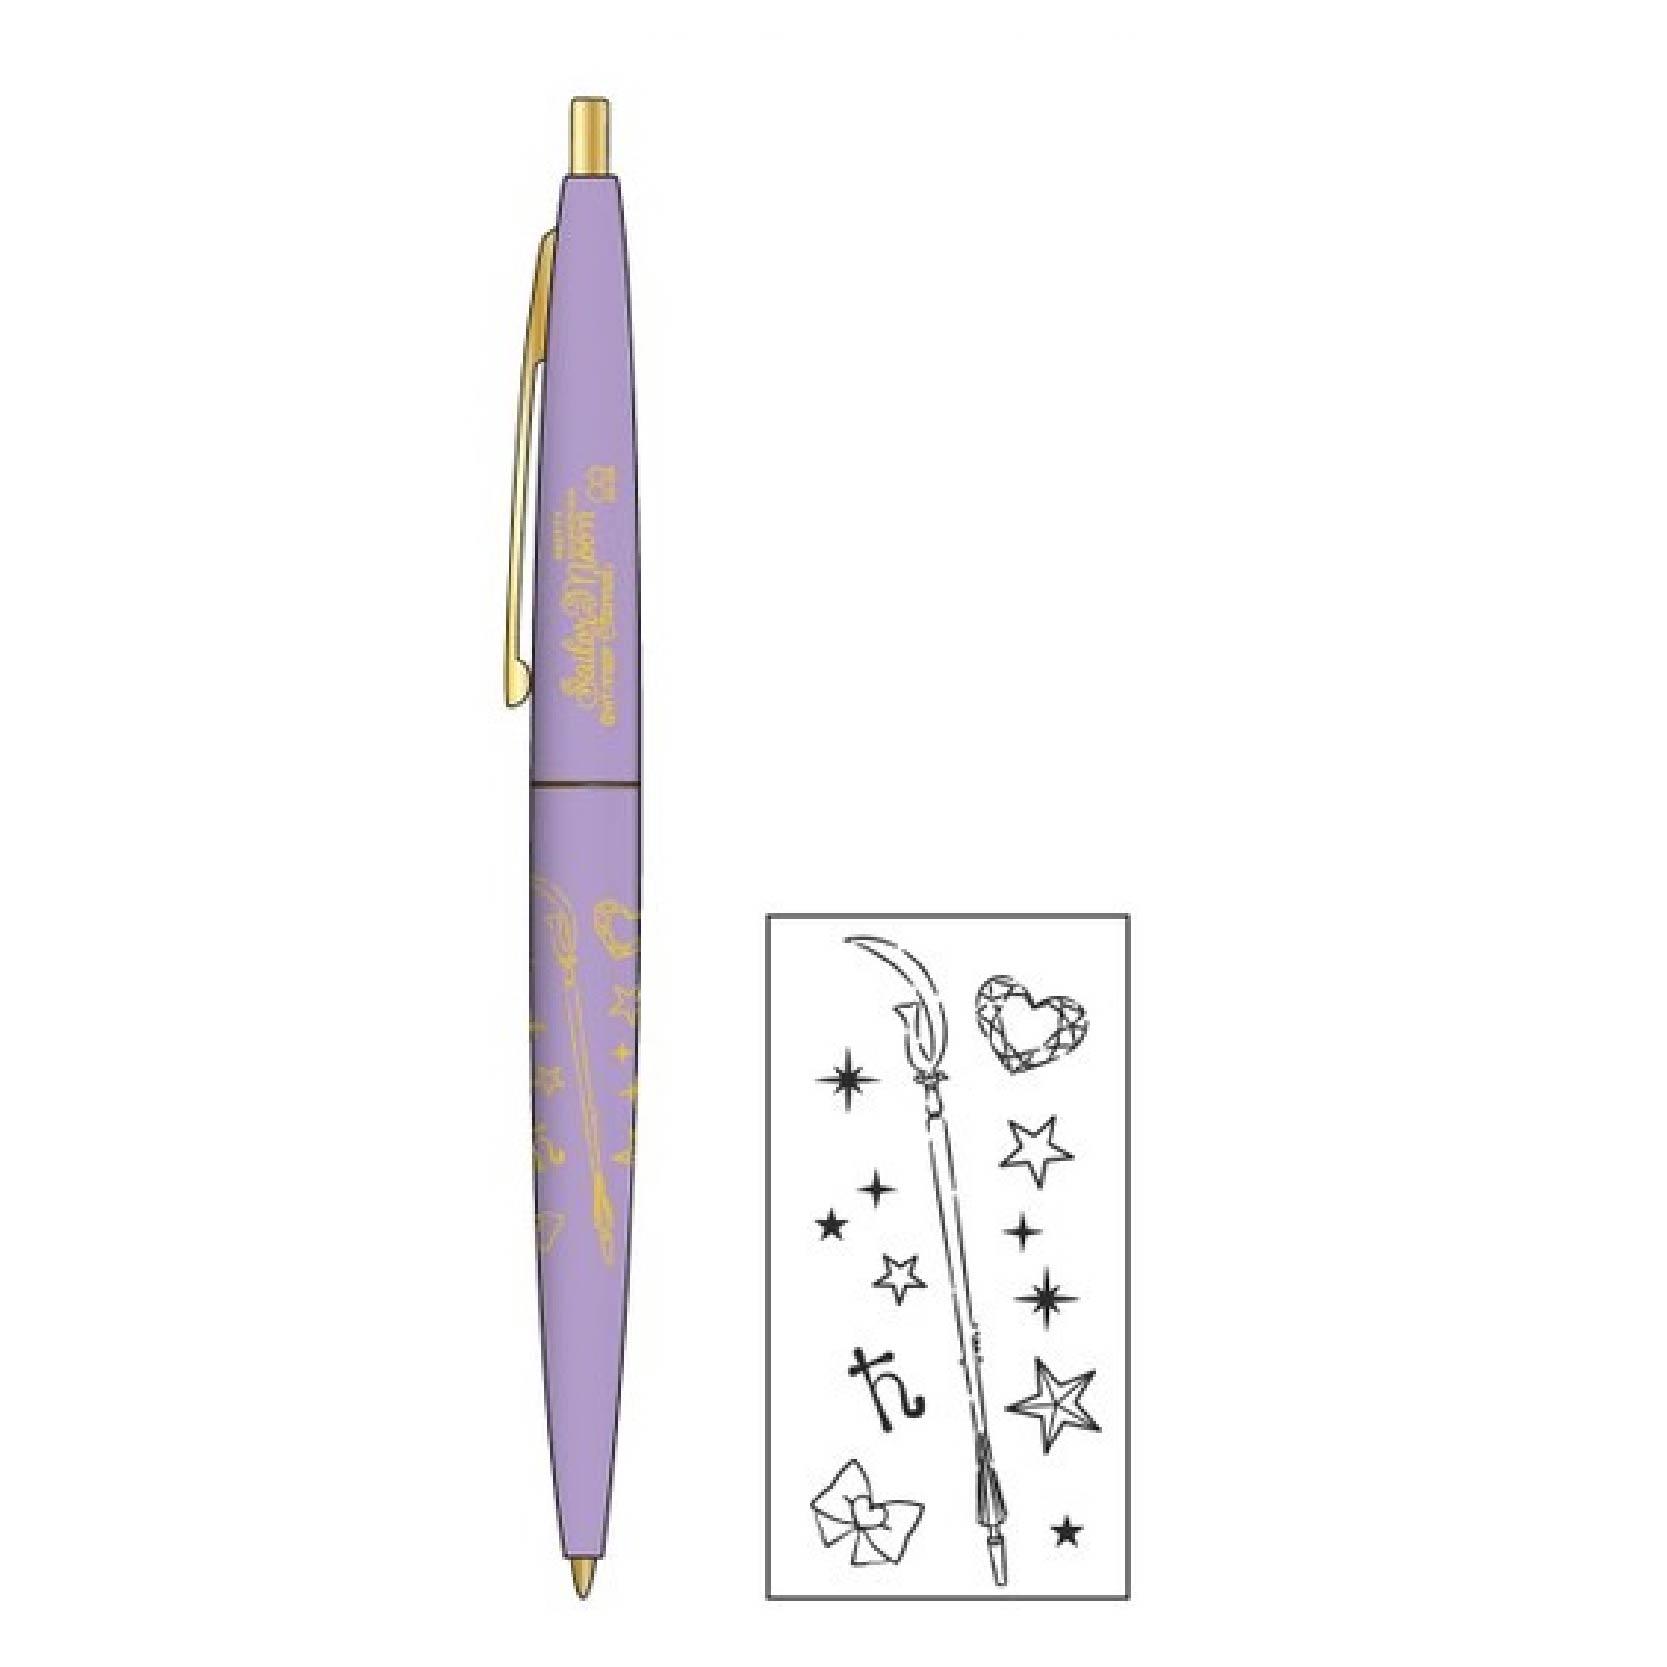 Sun-star x BIC S46507 CLIC GOLD Sailor Moon 0.5mm Black Ink Oily Pen Modeling Oily Pen - CHL-STORE 